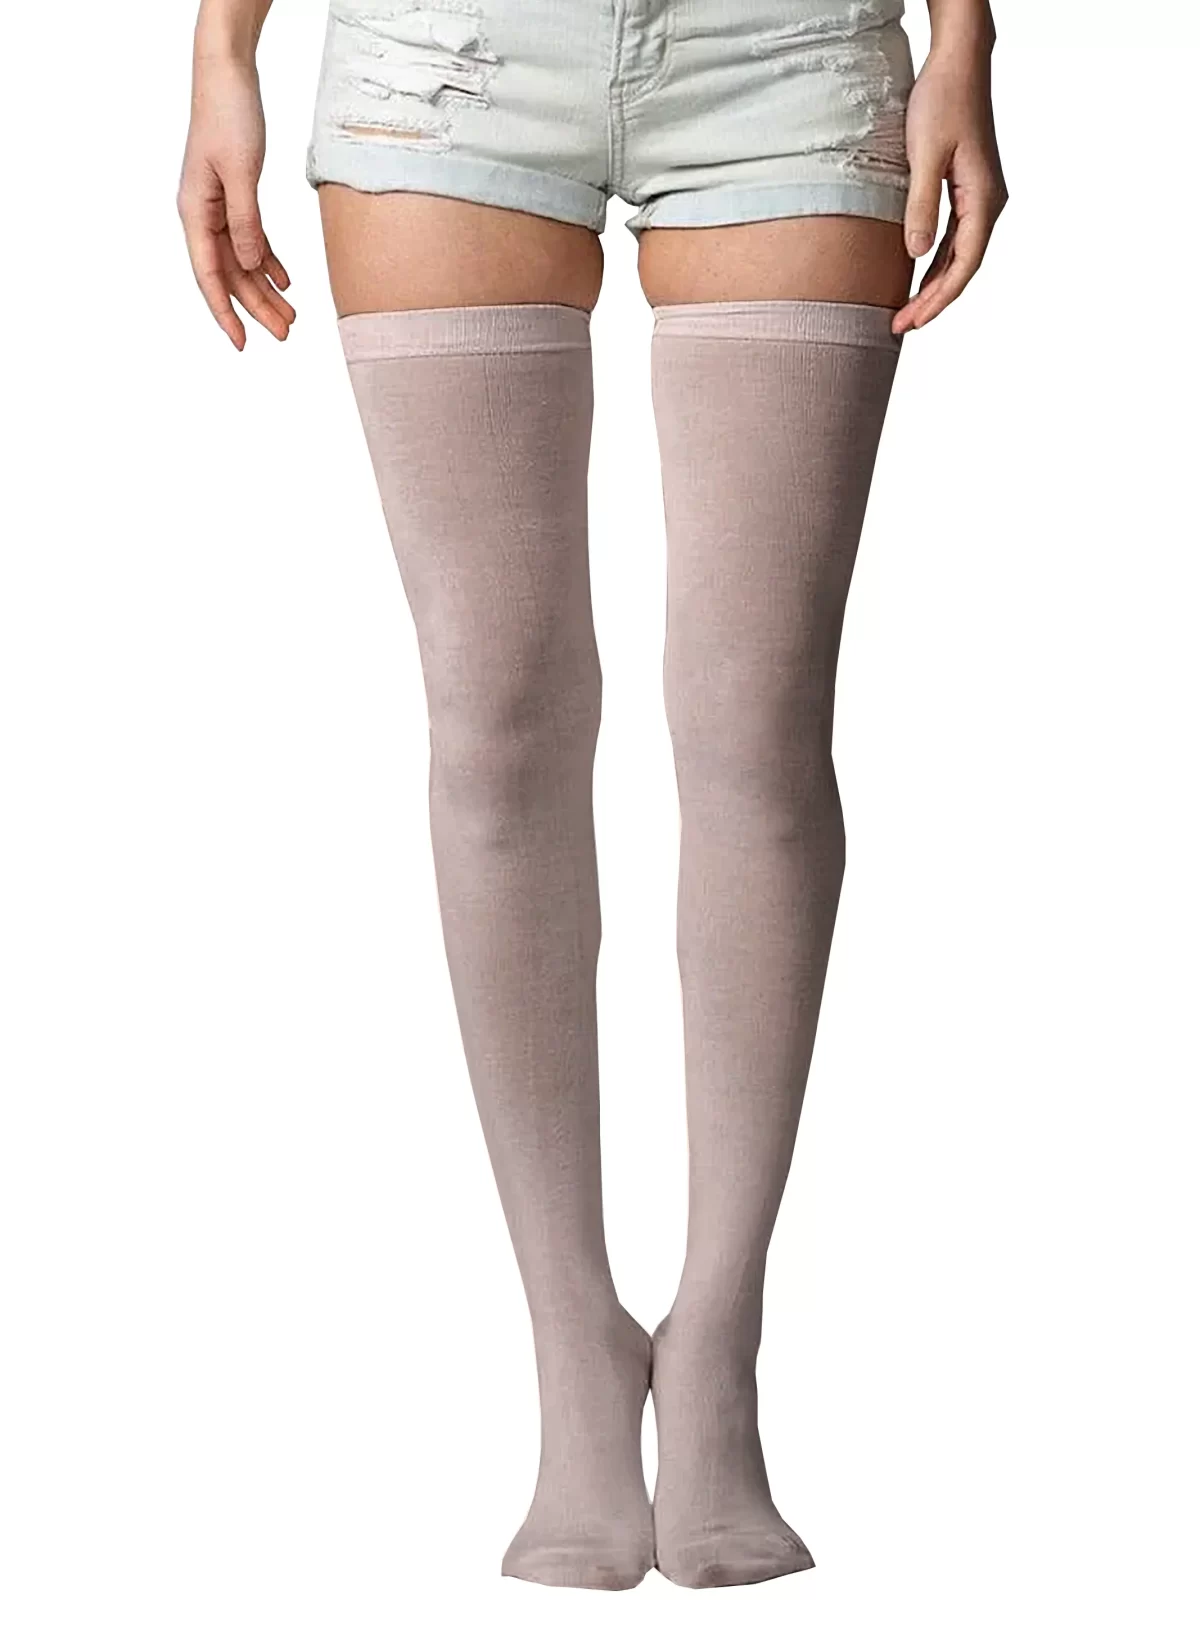 Skin Girls and Women's Thigh High Stocking/Socks ( Free Size )3